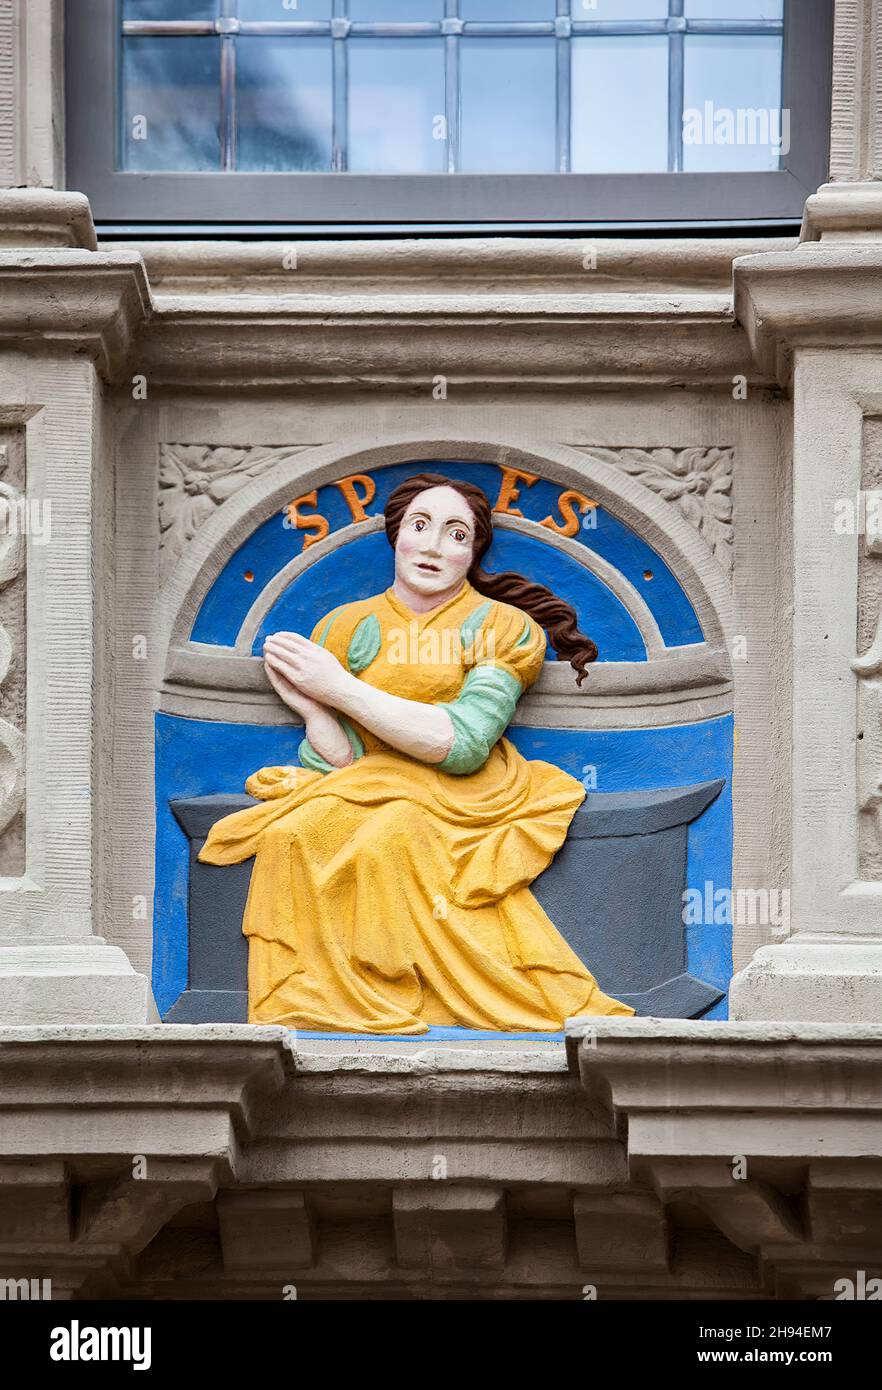 Spes, Latin for Hope, decoration of the facade, Hexenbürgermeisterhaus, Lemgo, North Rhine-Westphalia, Germany, Europe Stock Photo